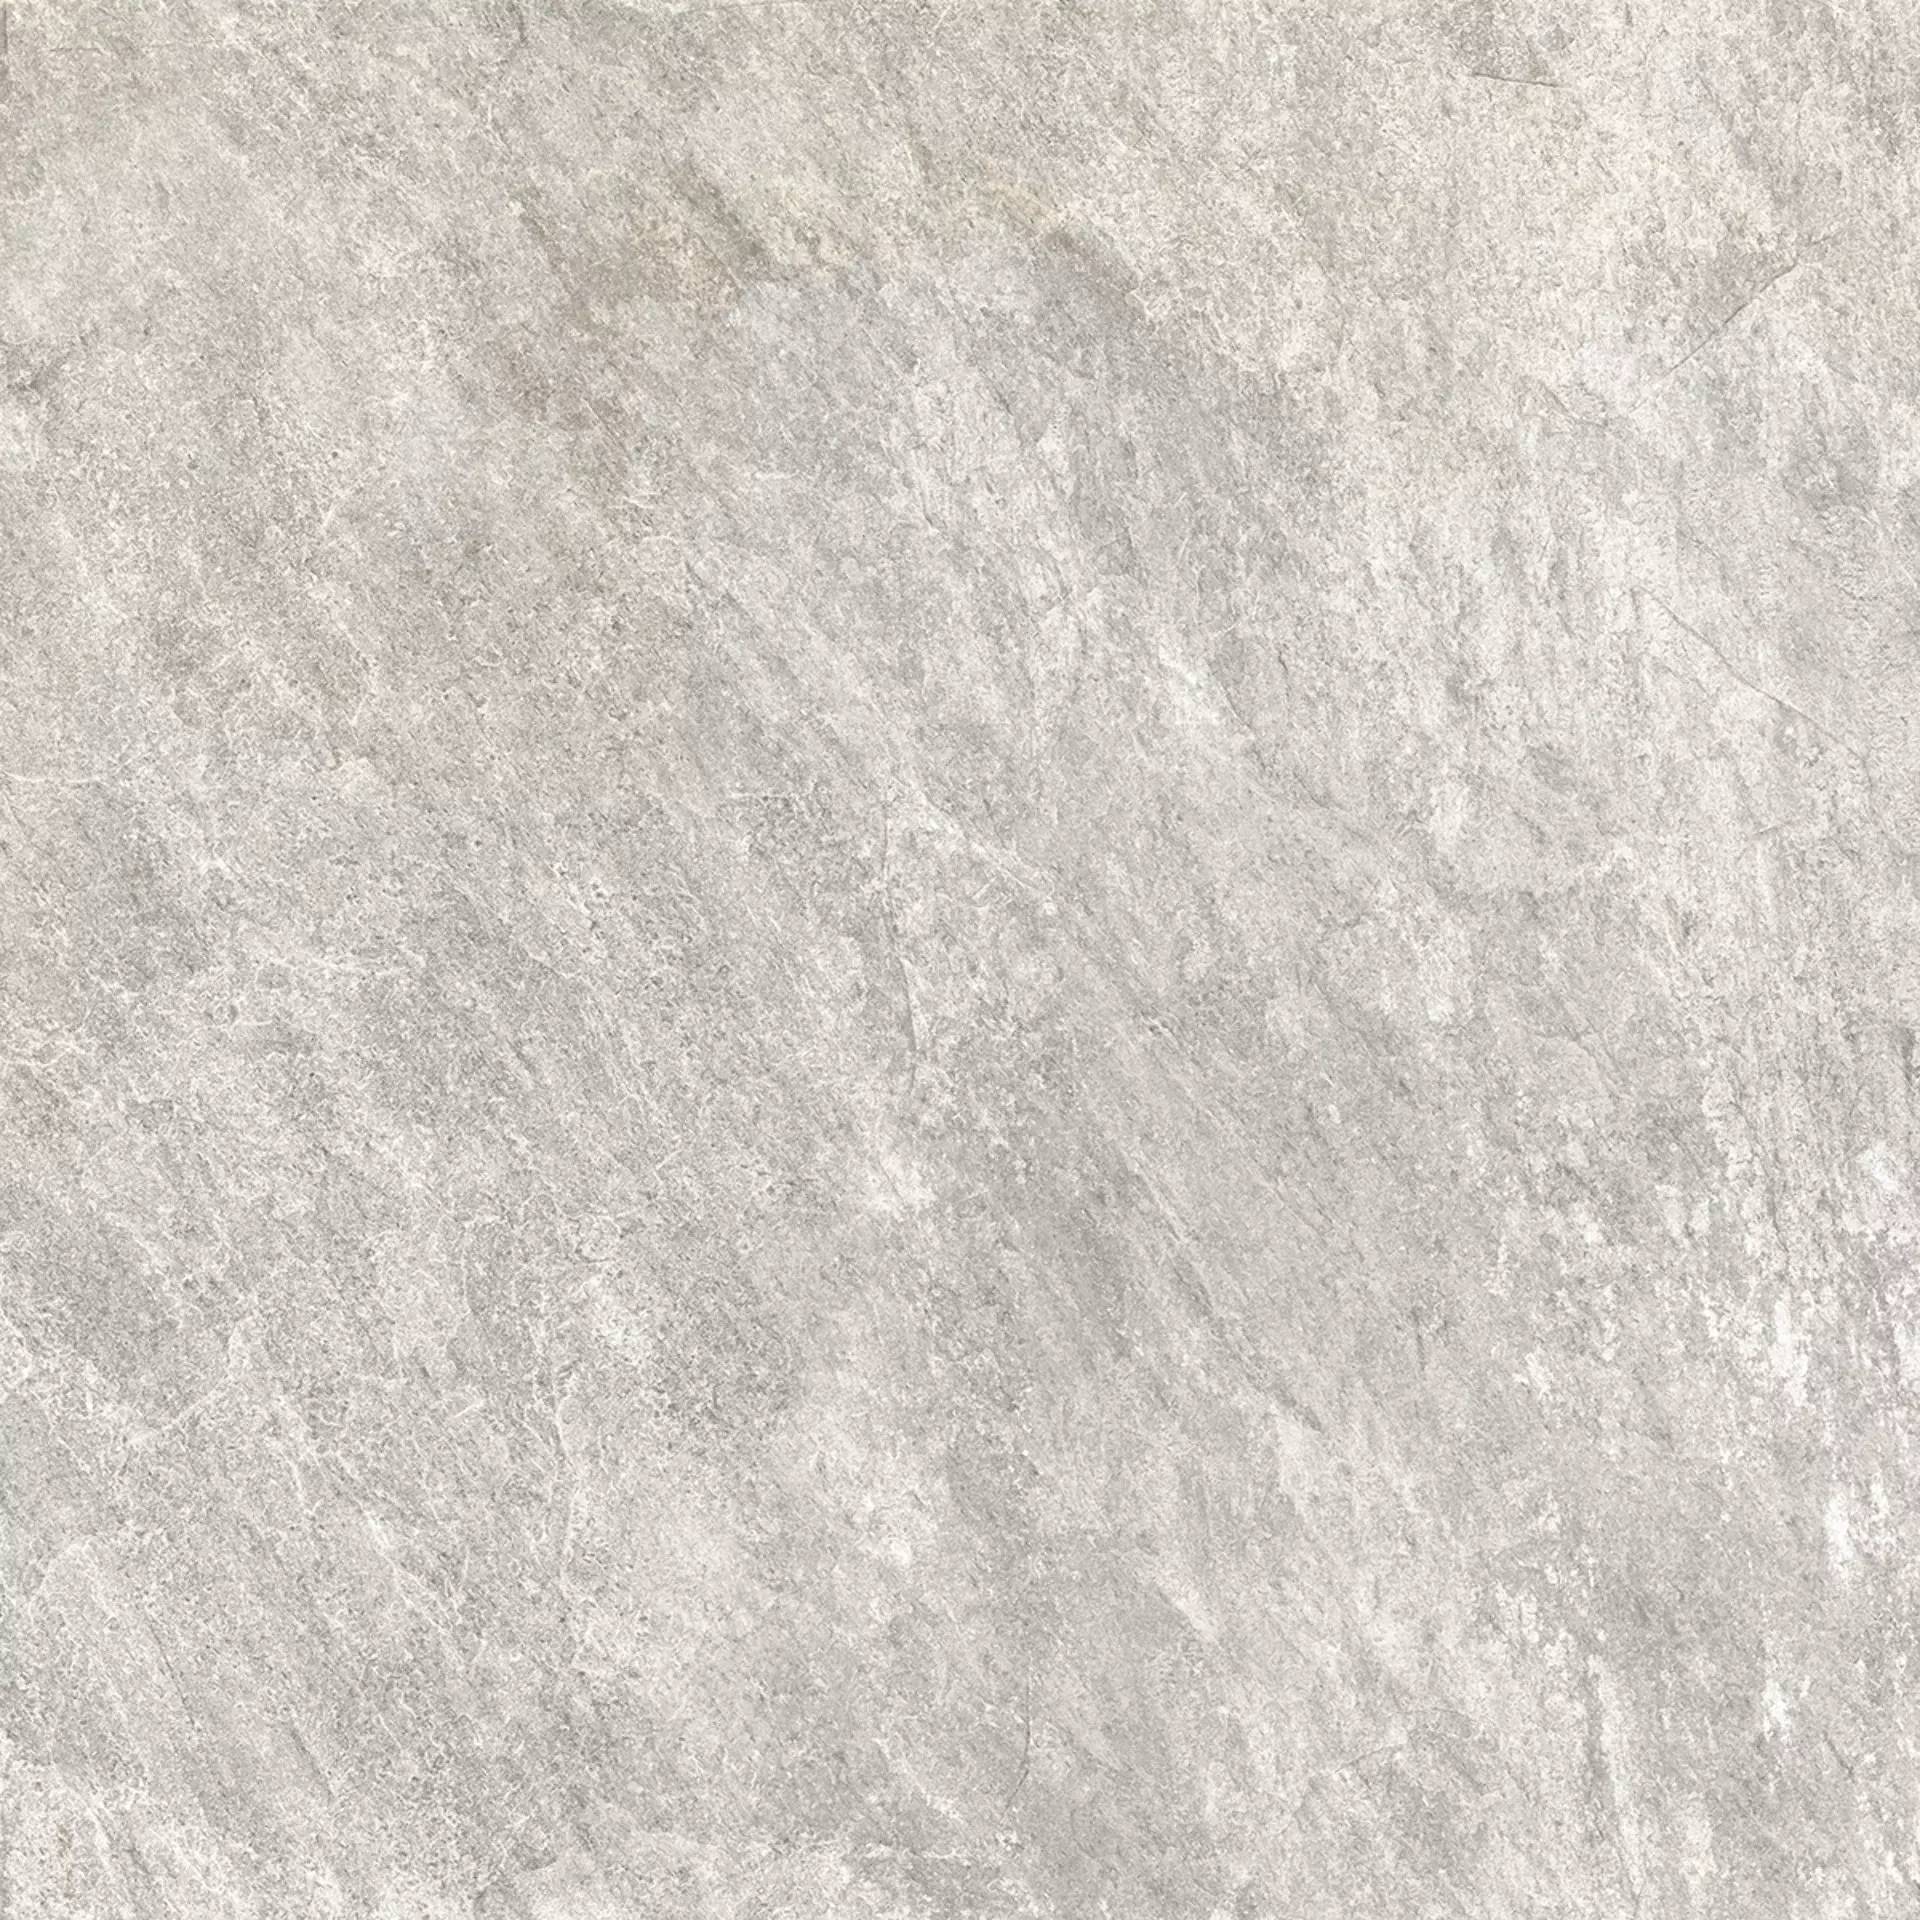 Rondine Quarzi Light Grey Naturale J87288 60,5x60,5cm 9,5mm